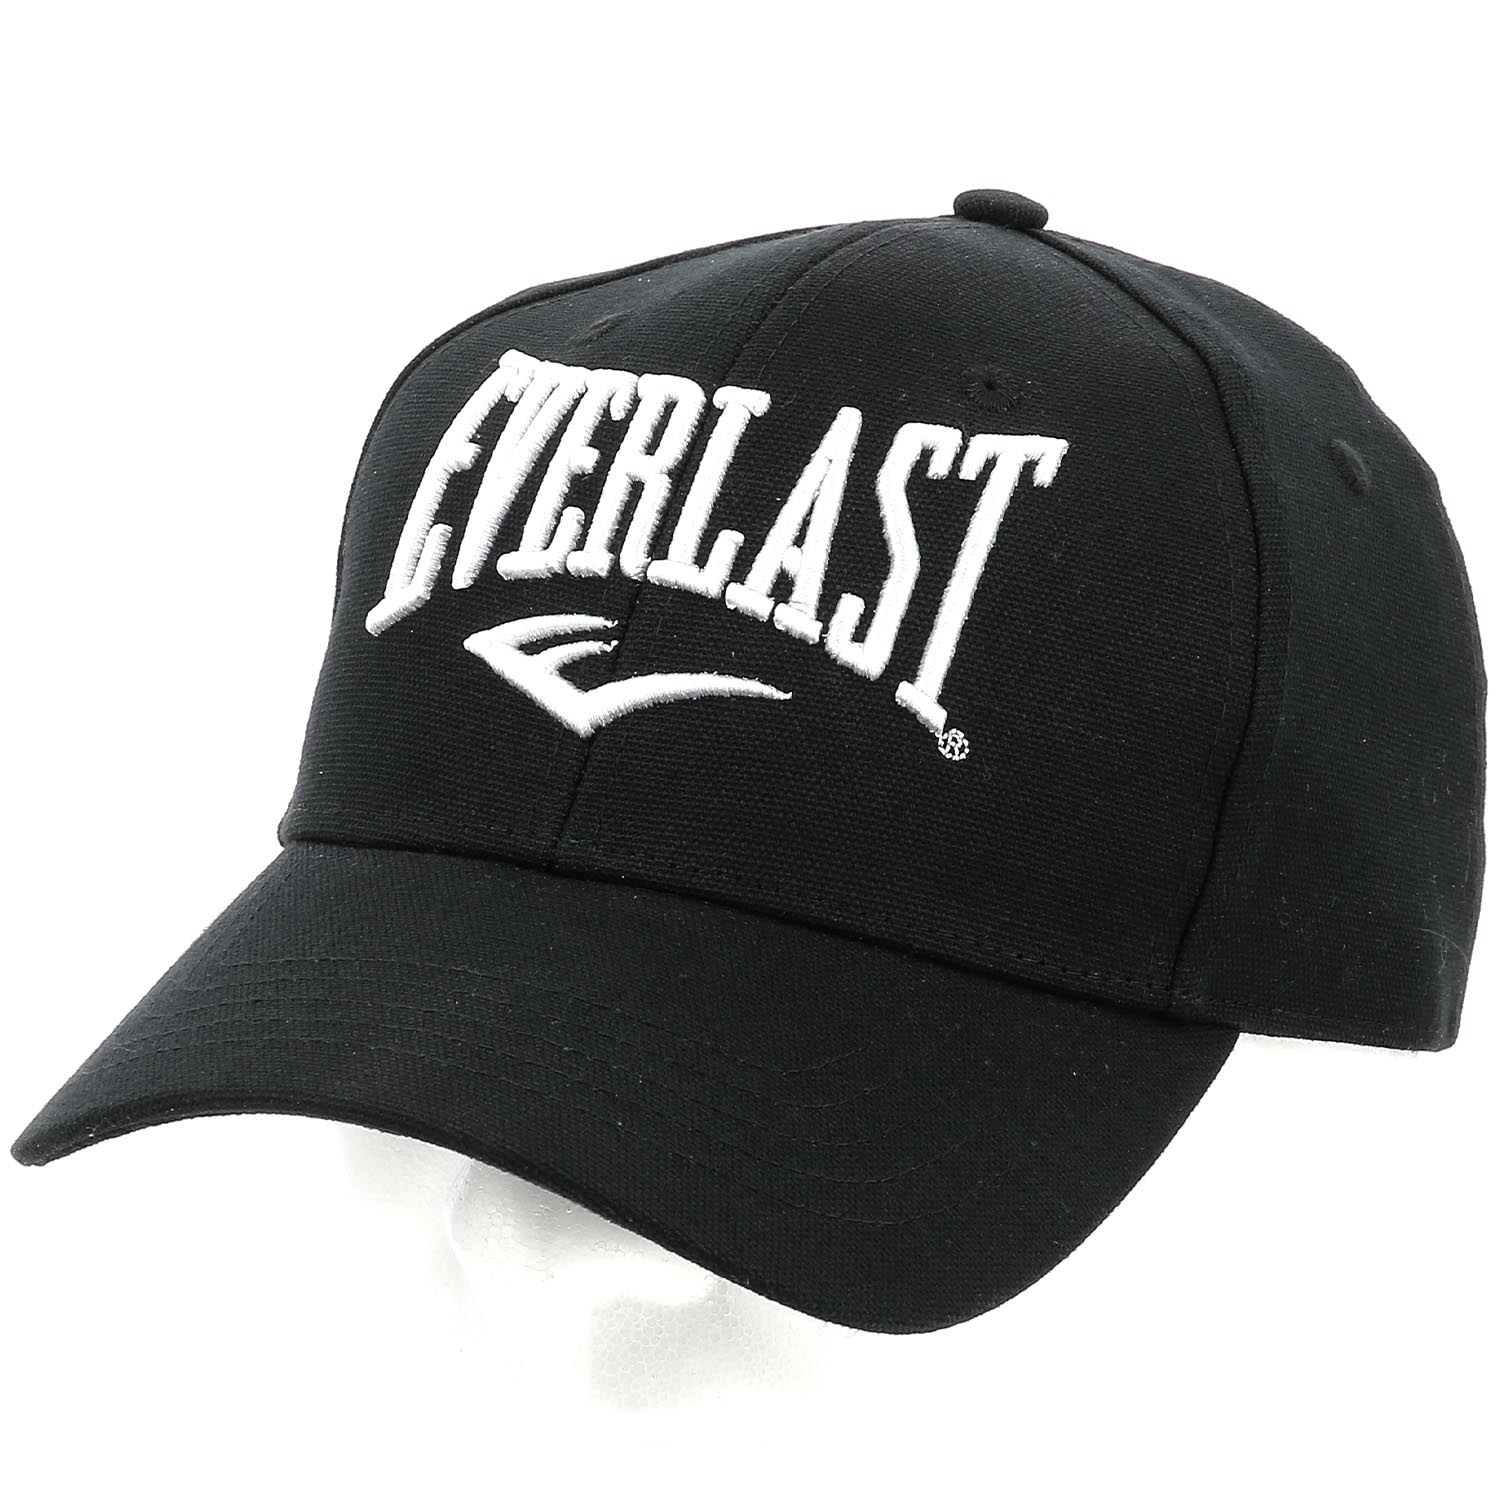 Everlast Cap, Hugy, schwarz